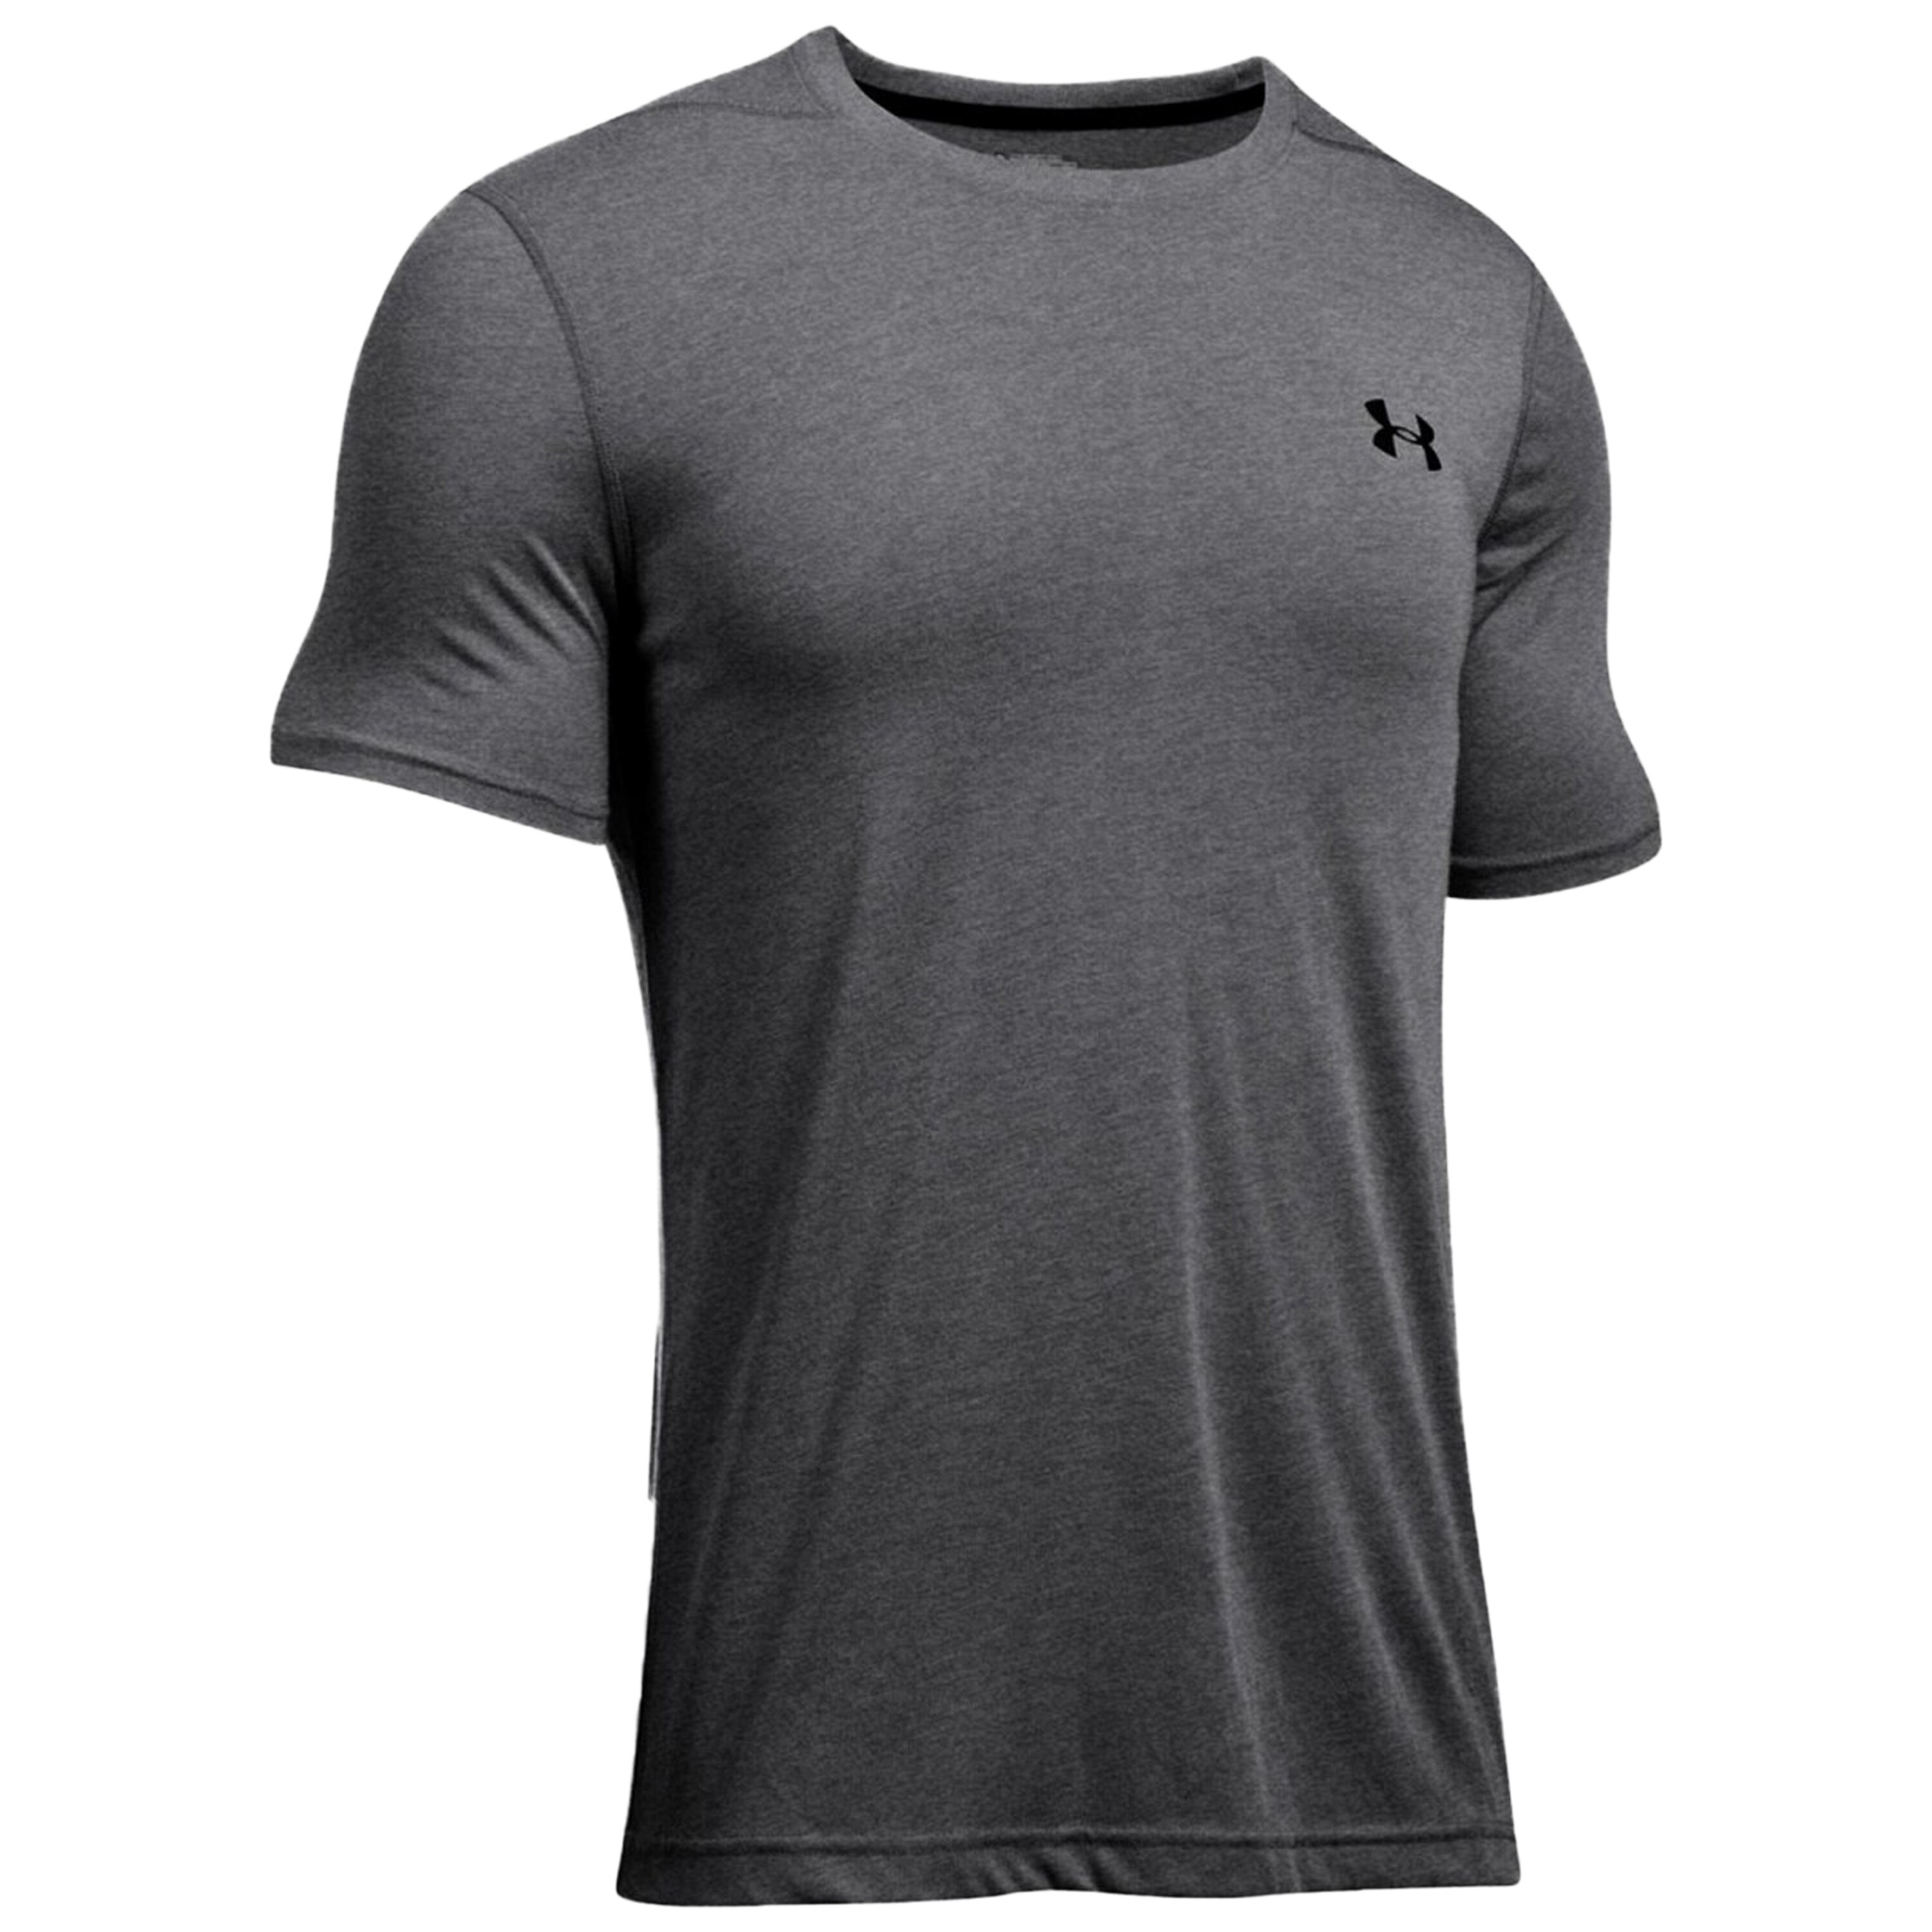 Camiseta Armour Fitness Threadborne Fitted gris oscuro